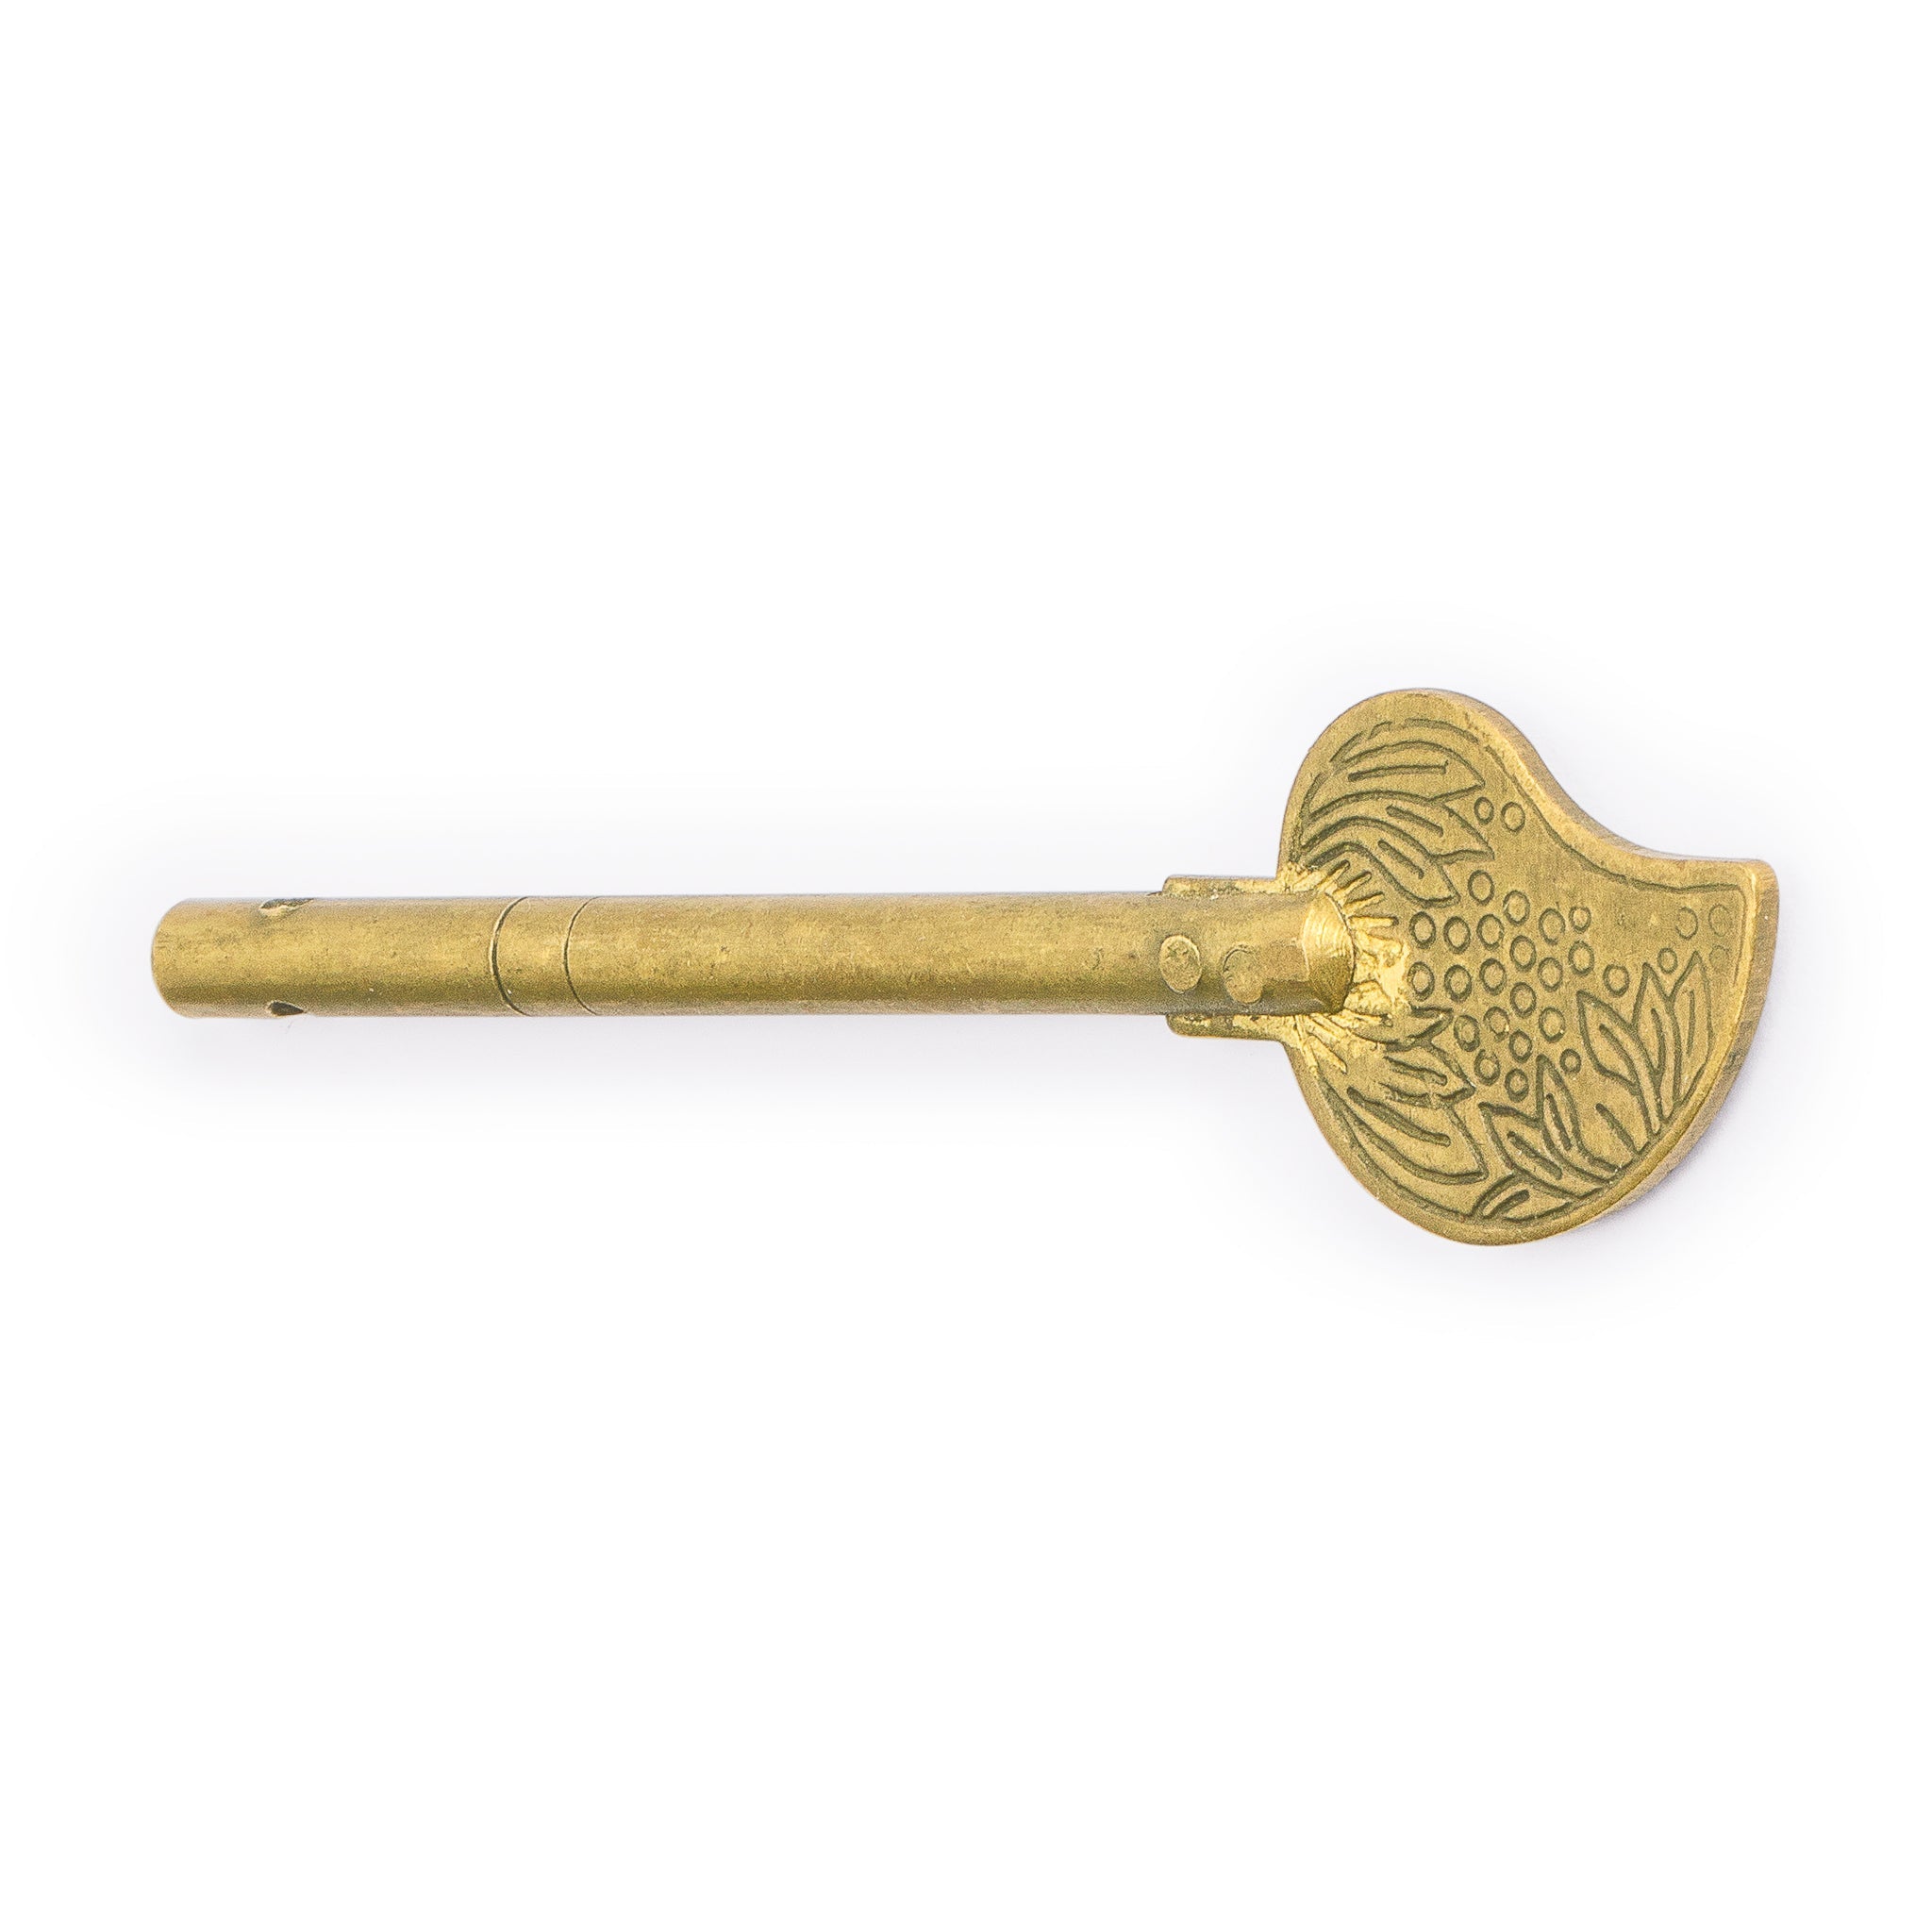 Bird Tail Key Pins 3.3" Set of 2-Chinese Brass Hardware